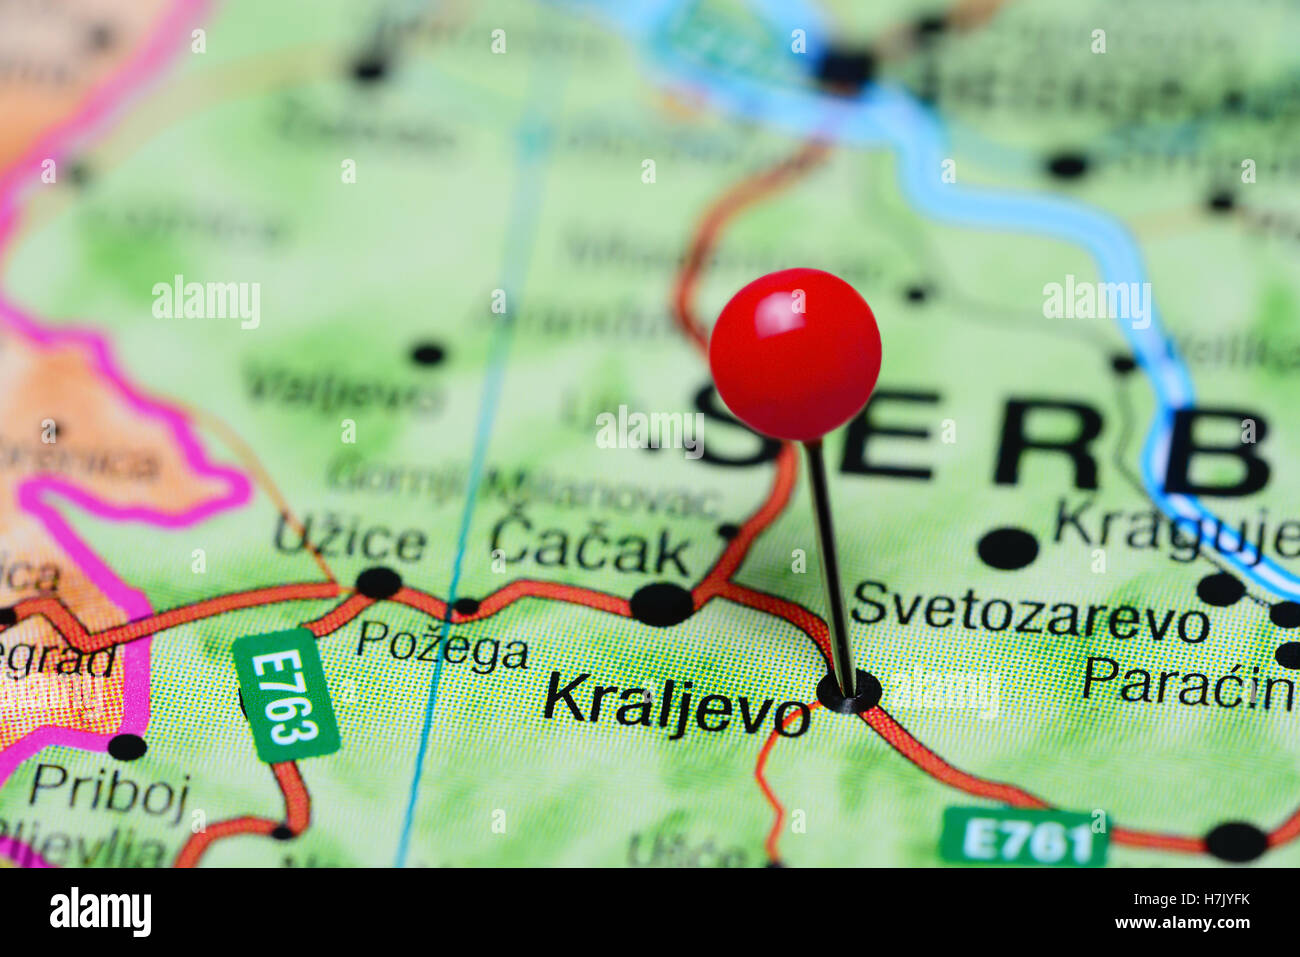 Kraljevo pinned on a map of Serbia Stock Photo